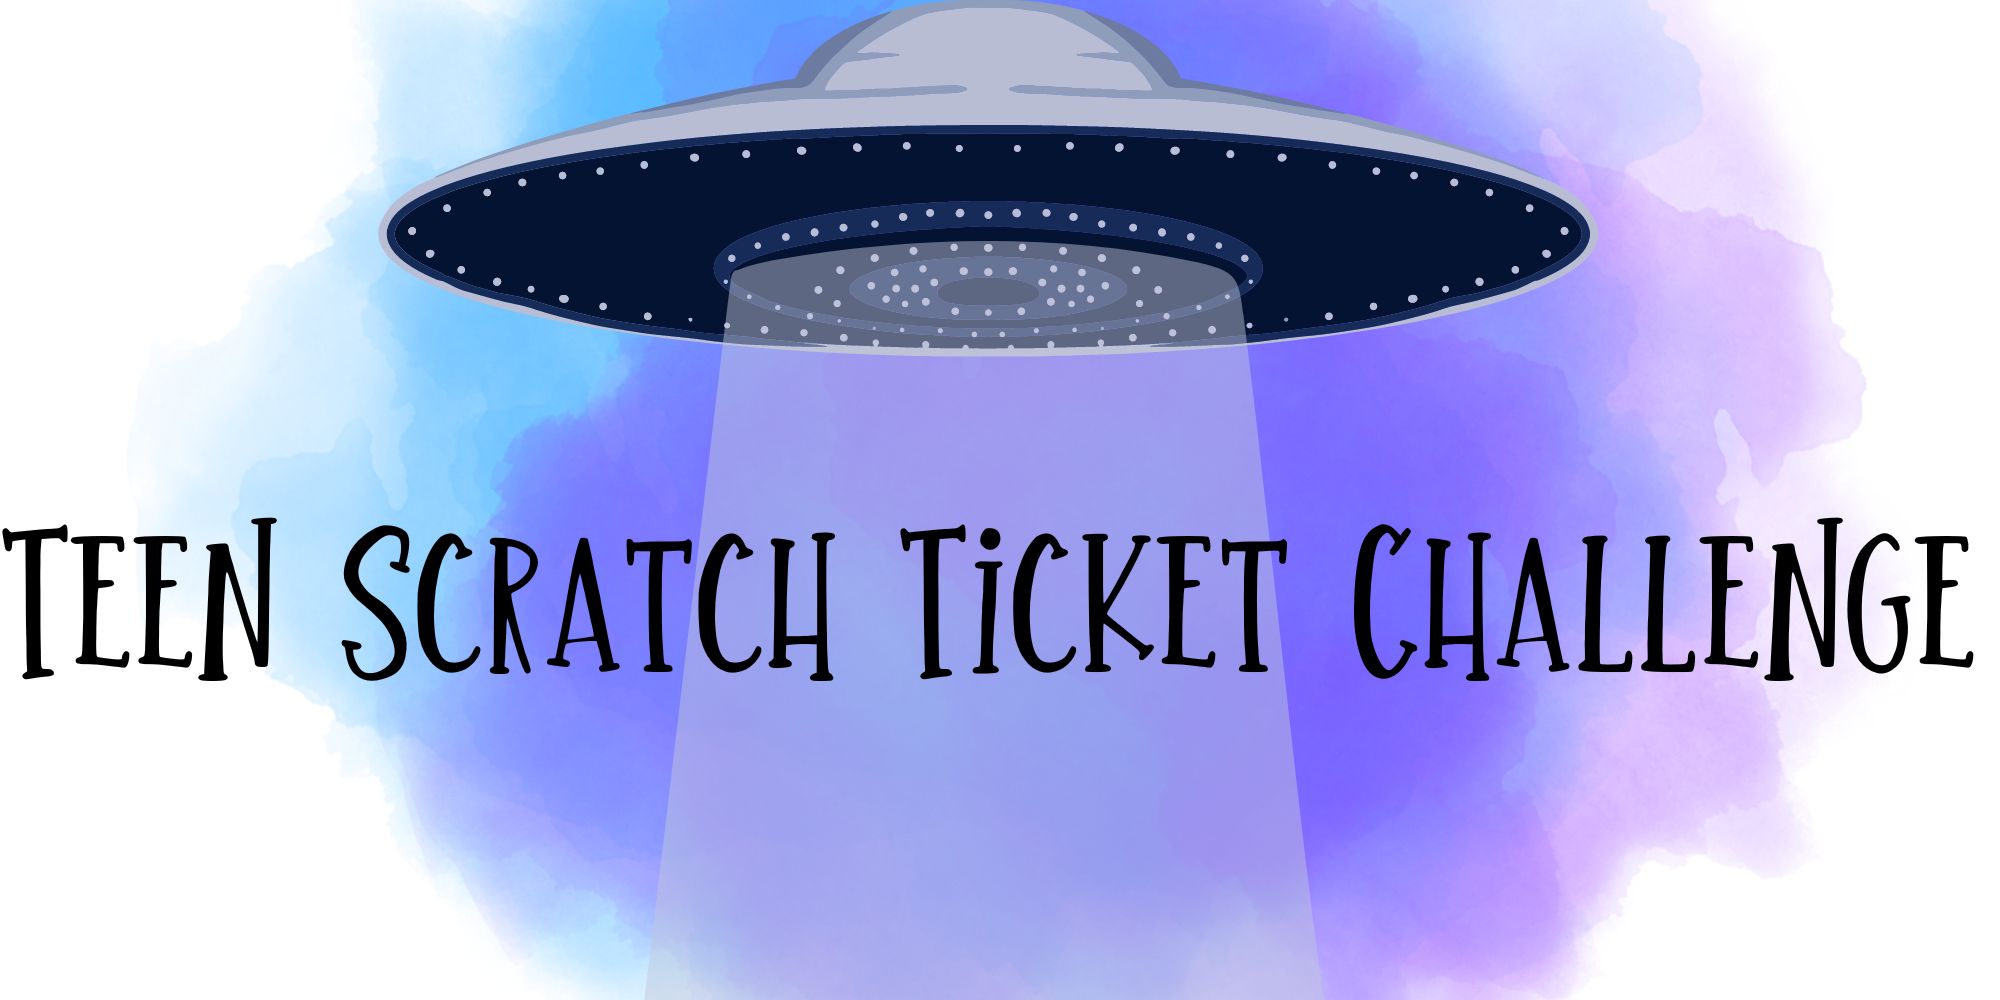 Teen Scratch Ticket Challenge!